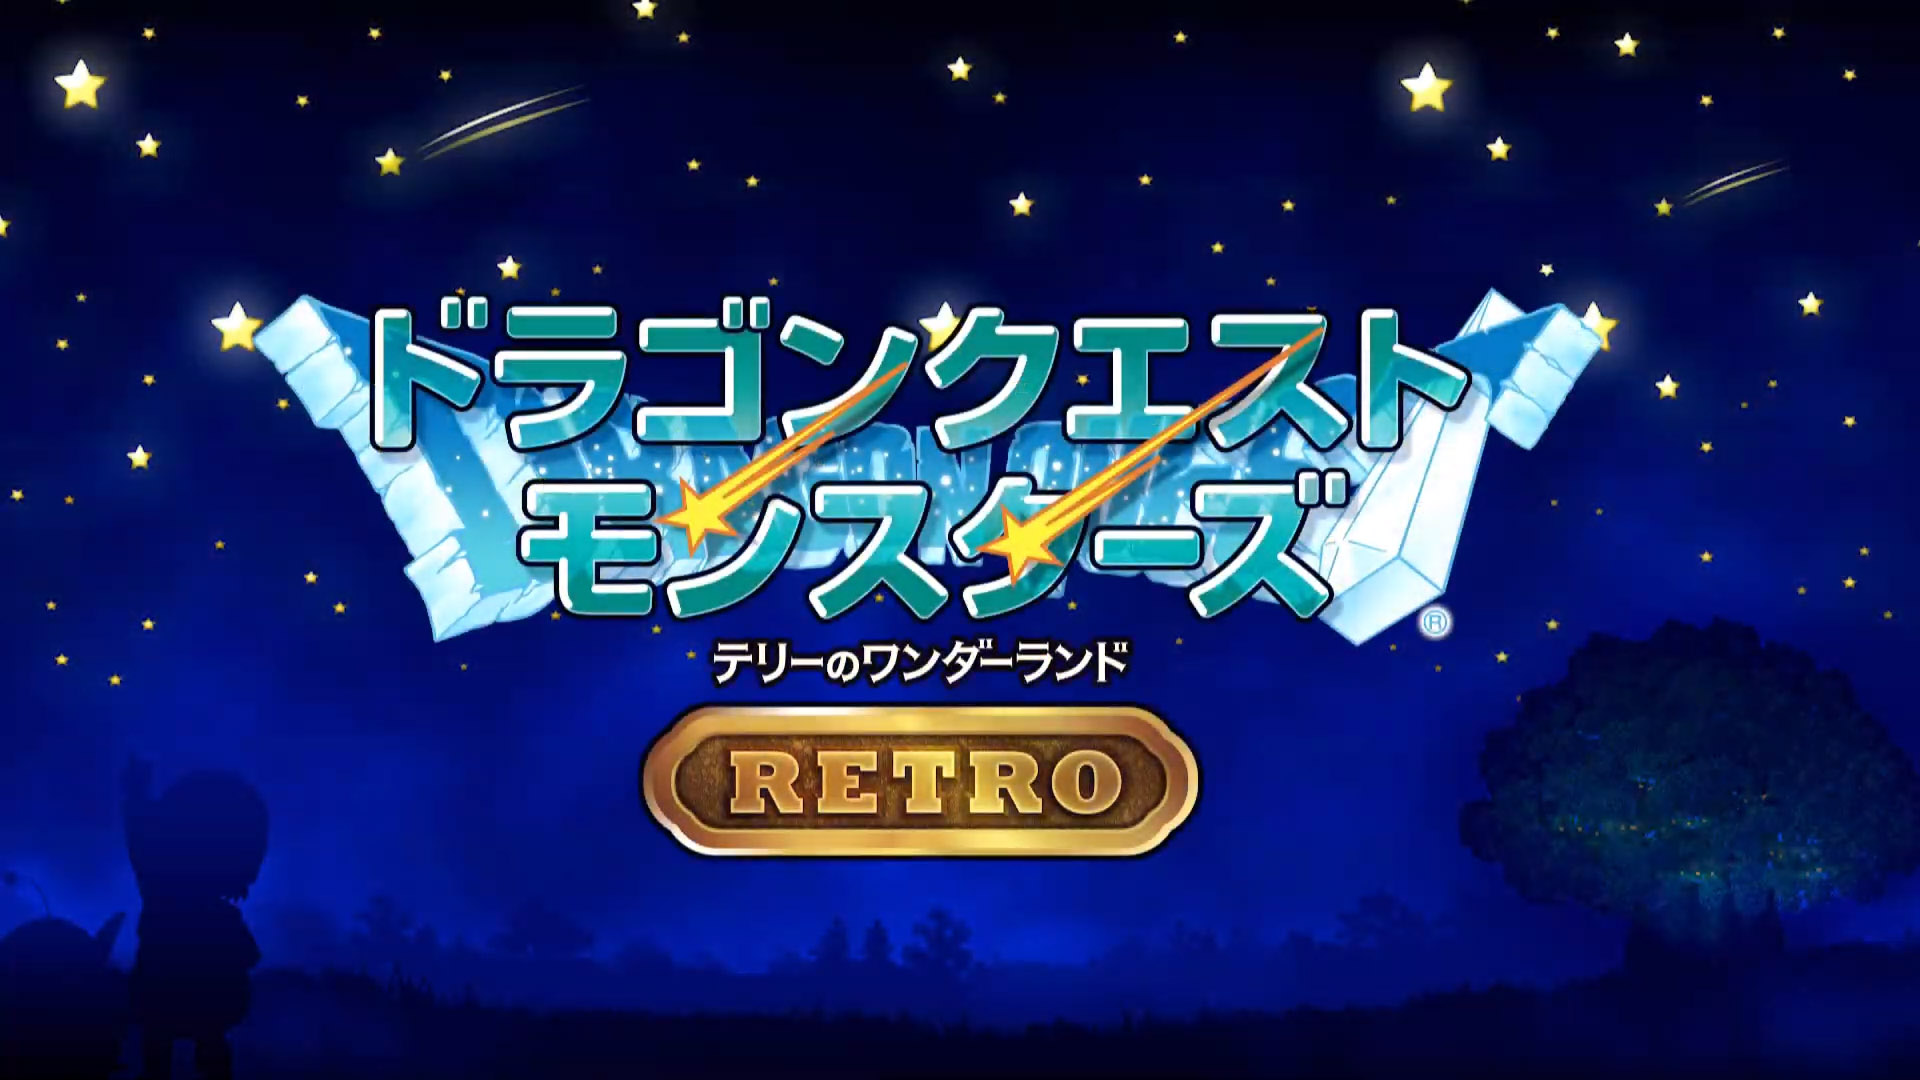 Square Enix ประกาศพอร์ต Dragon Quest Monsters: Terry’s Wonderland Retro วางจำหน่ายให้กับ Nintendo Switch